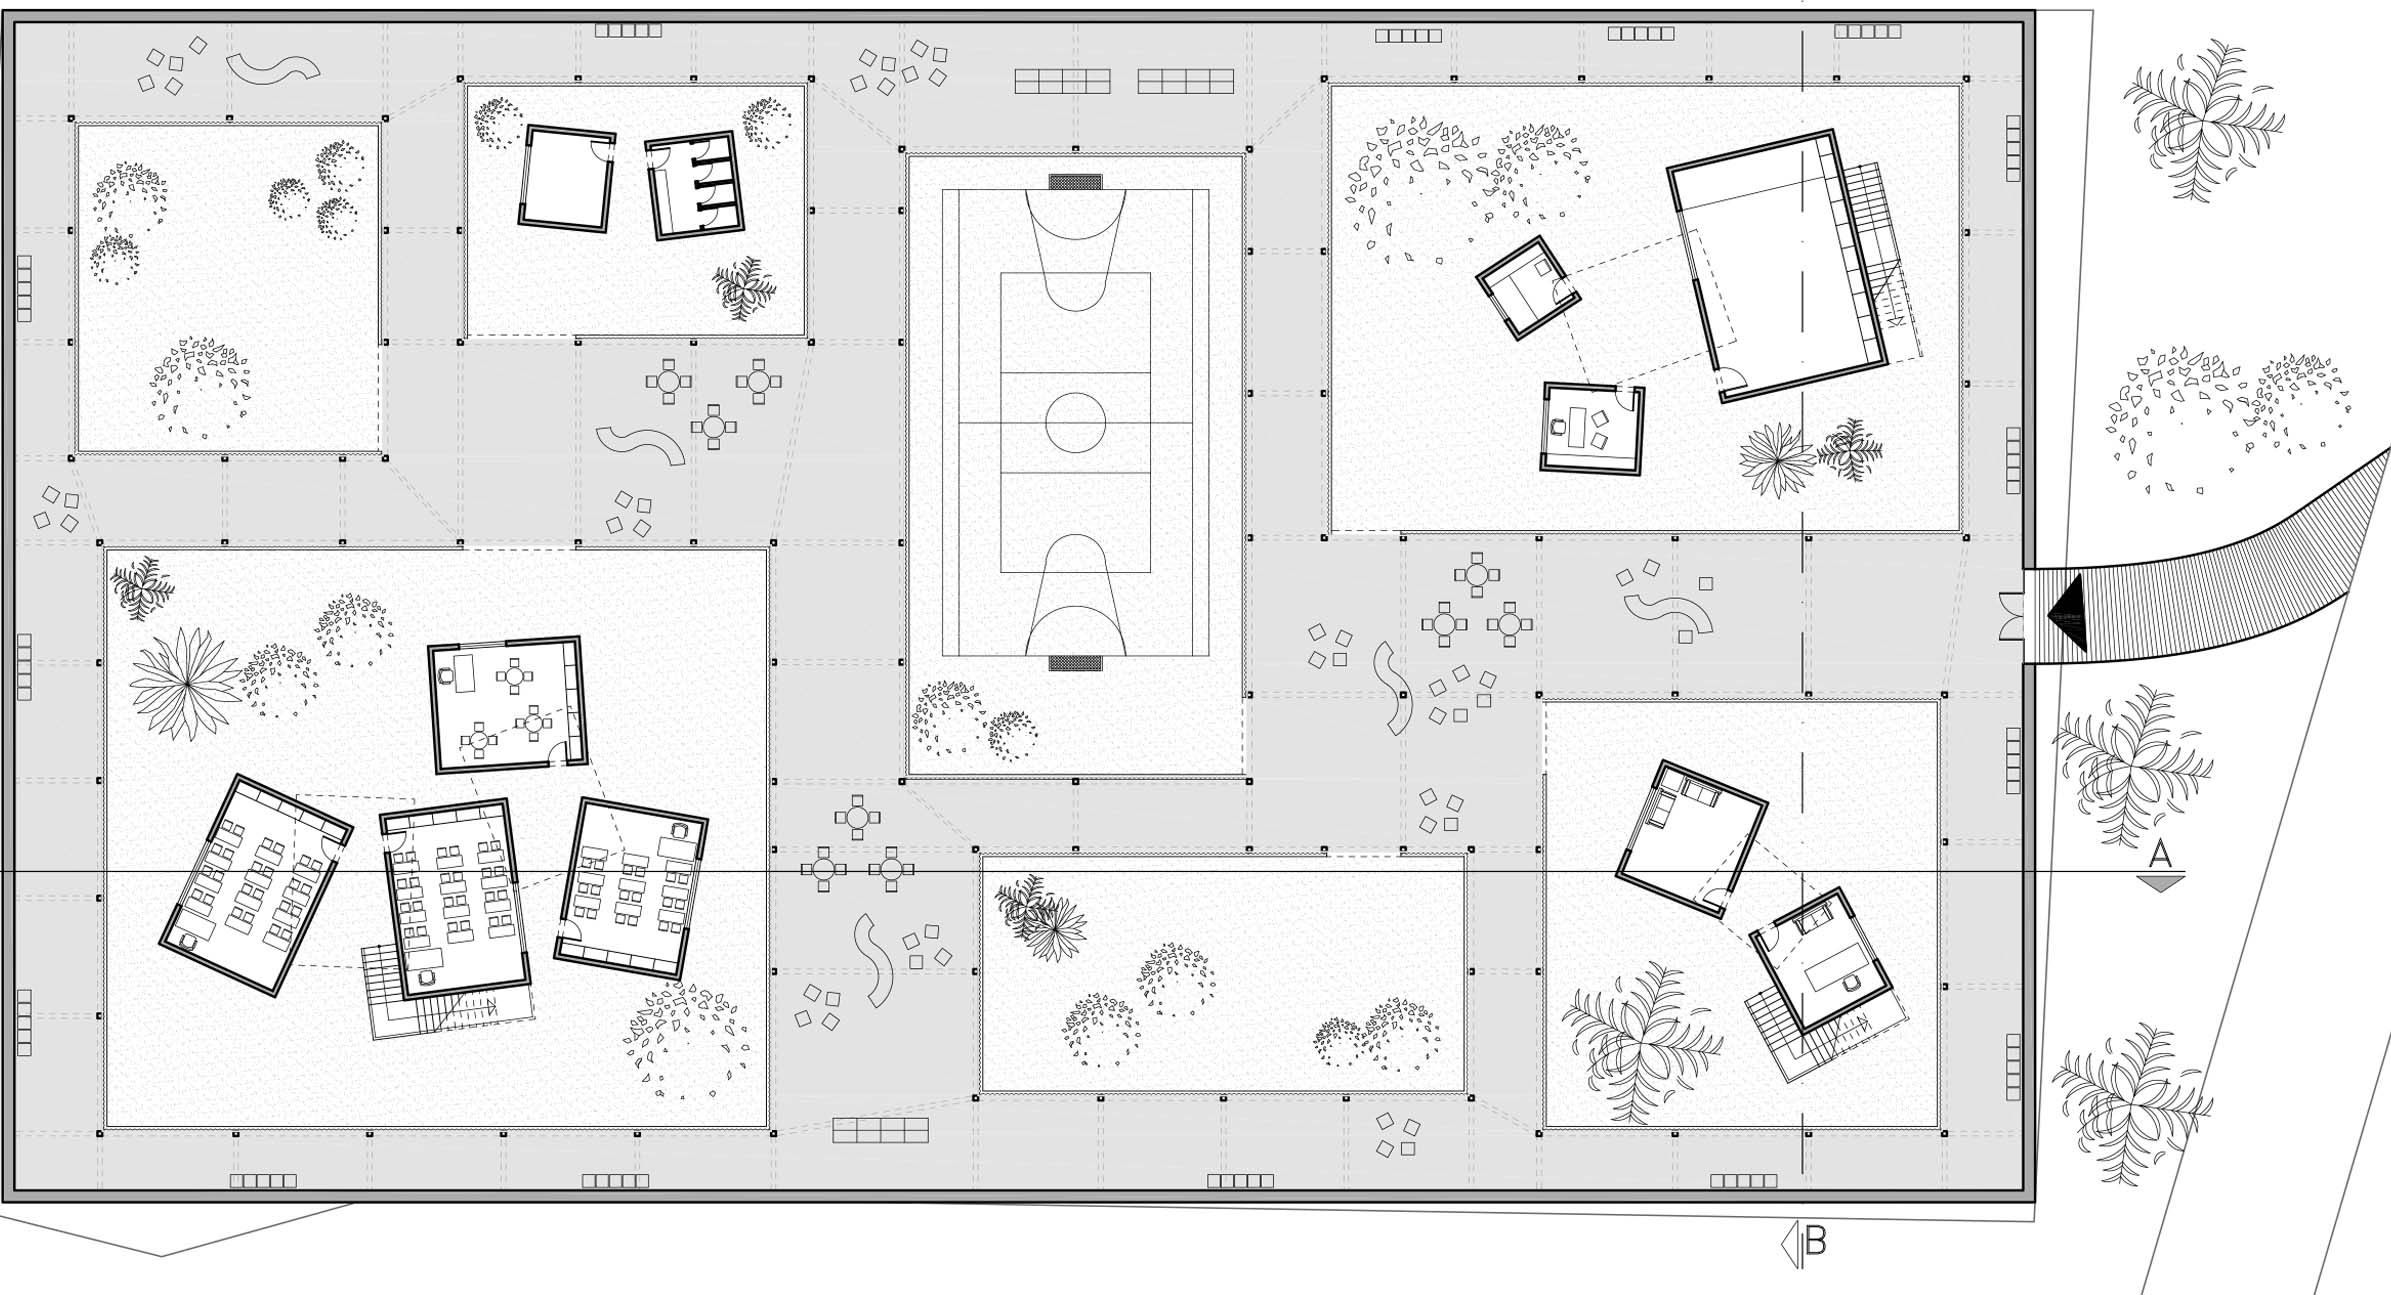 Ground Floor Plan of jiroft Elementary School